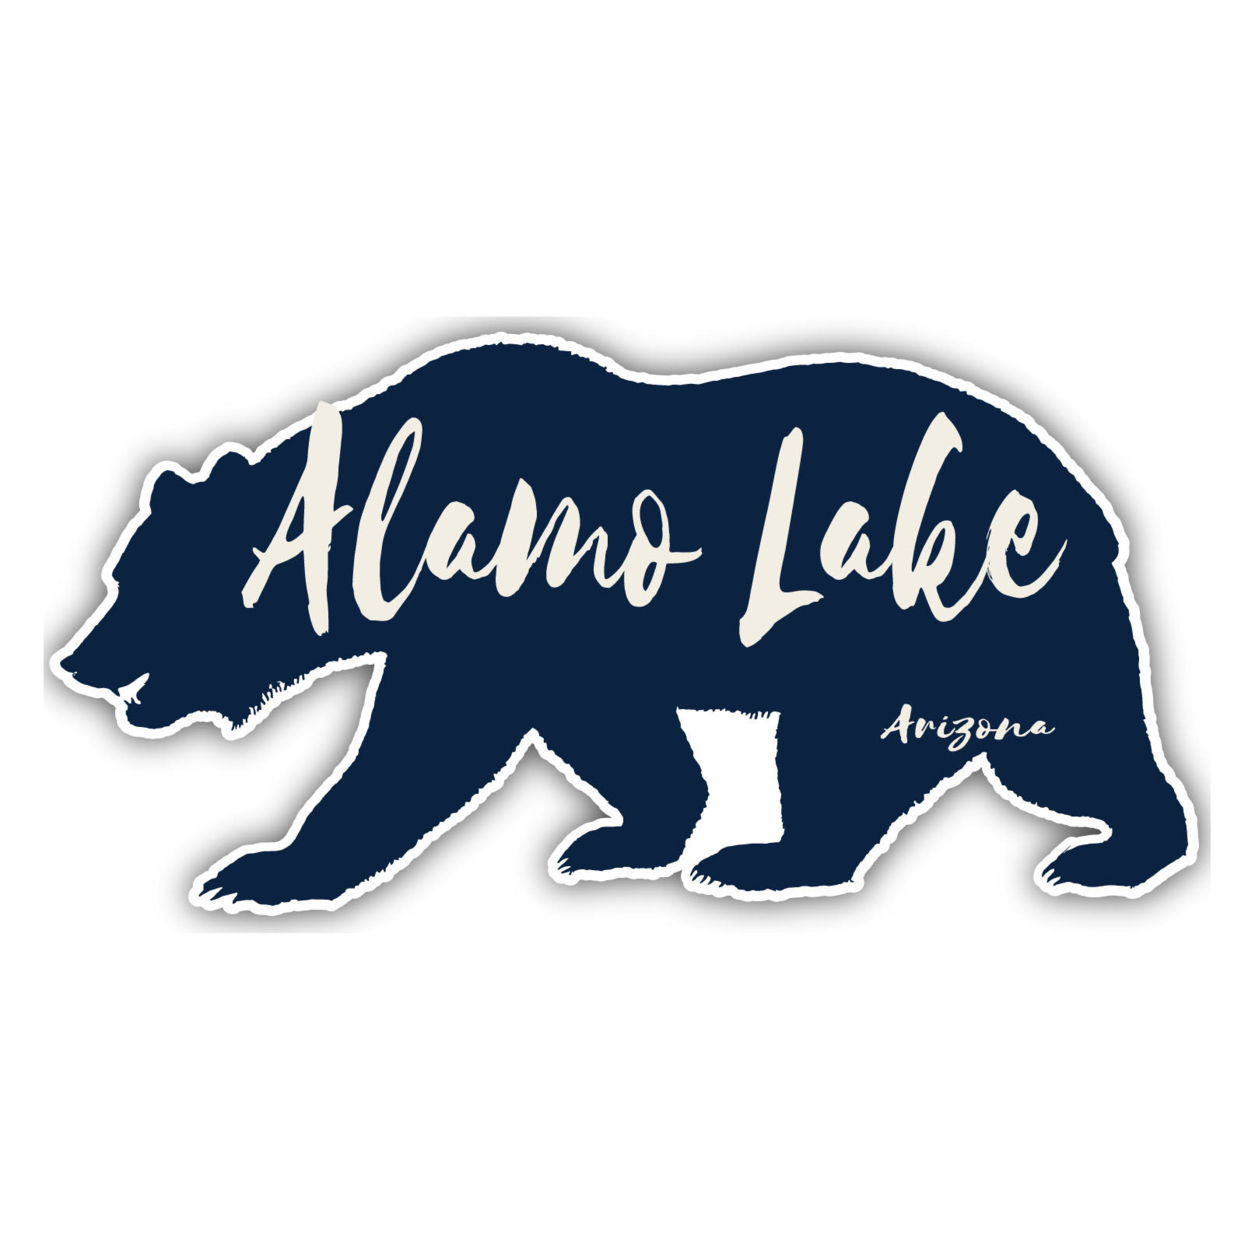 Alamo Lake Arizona Souvenir Decorative Stickers (Choose Theme And Size) - Single Unit, 12-Inch, Bear